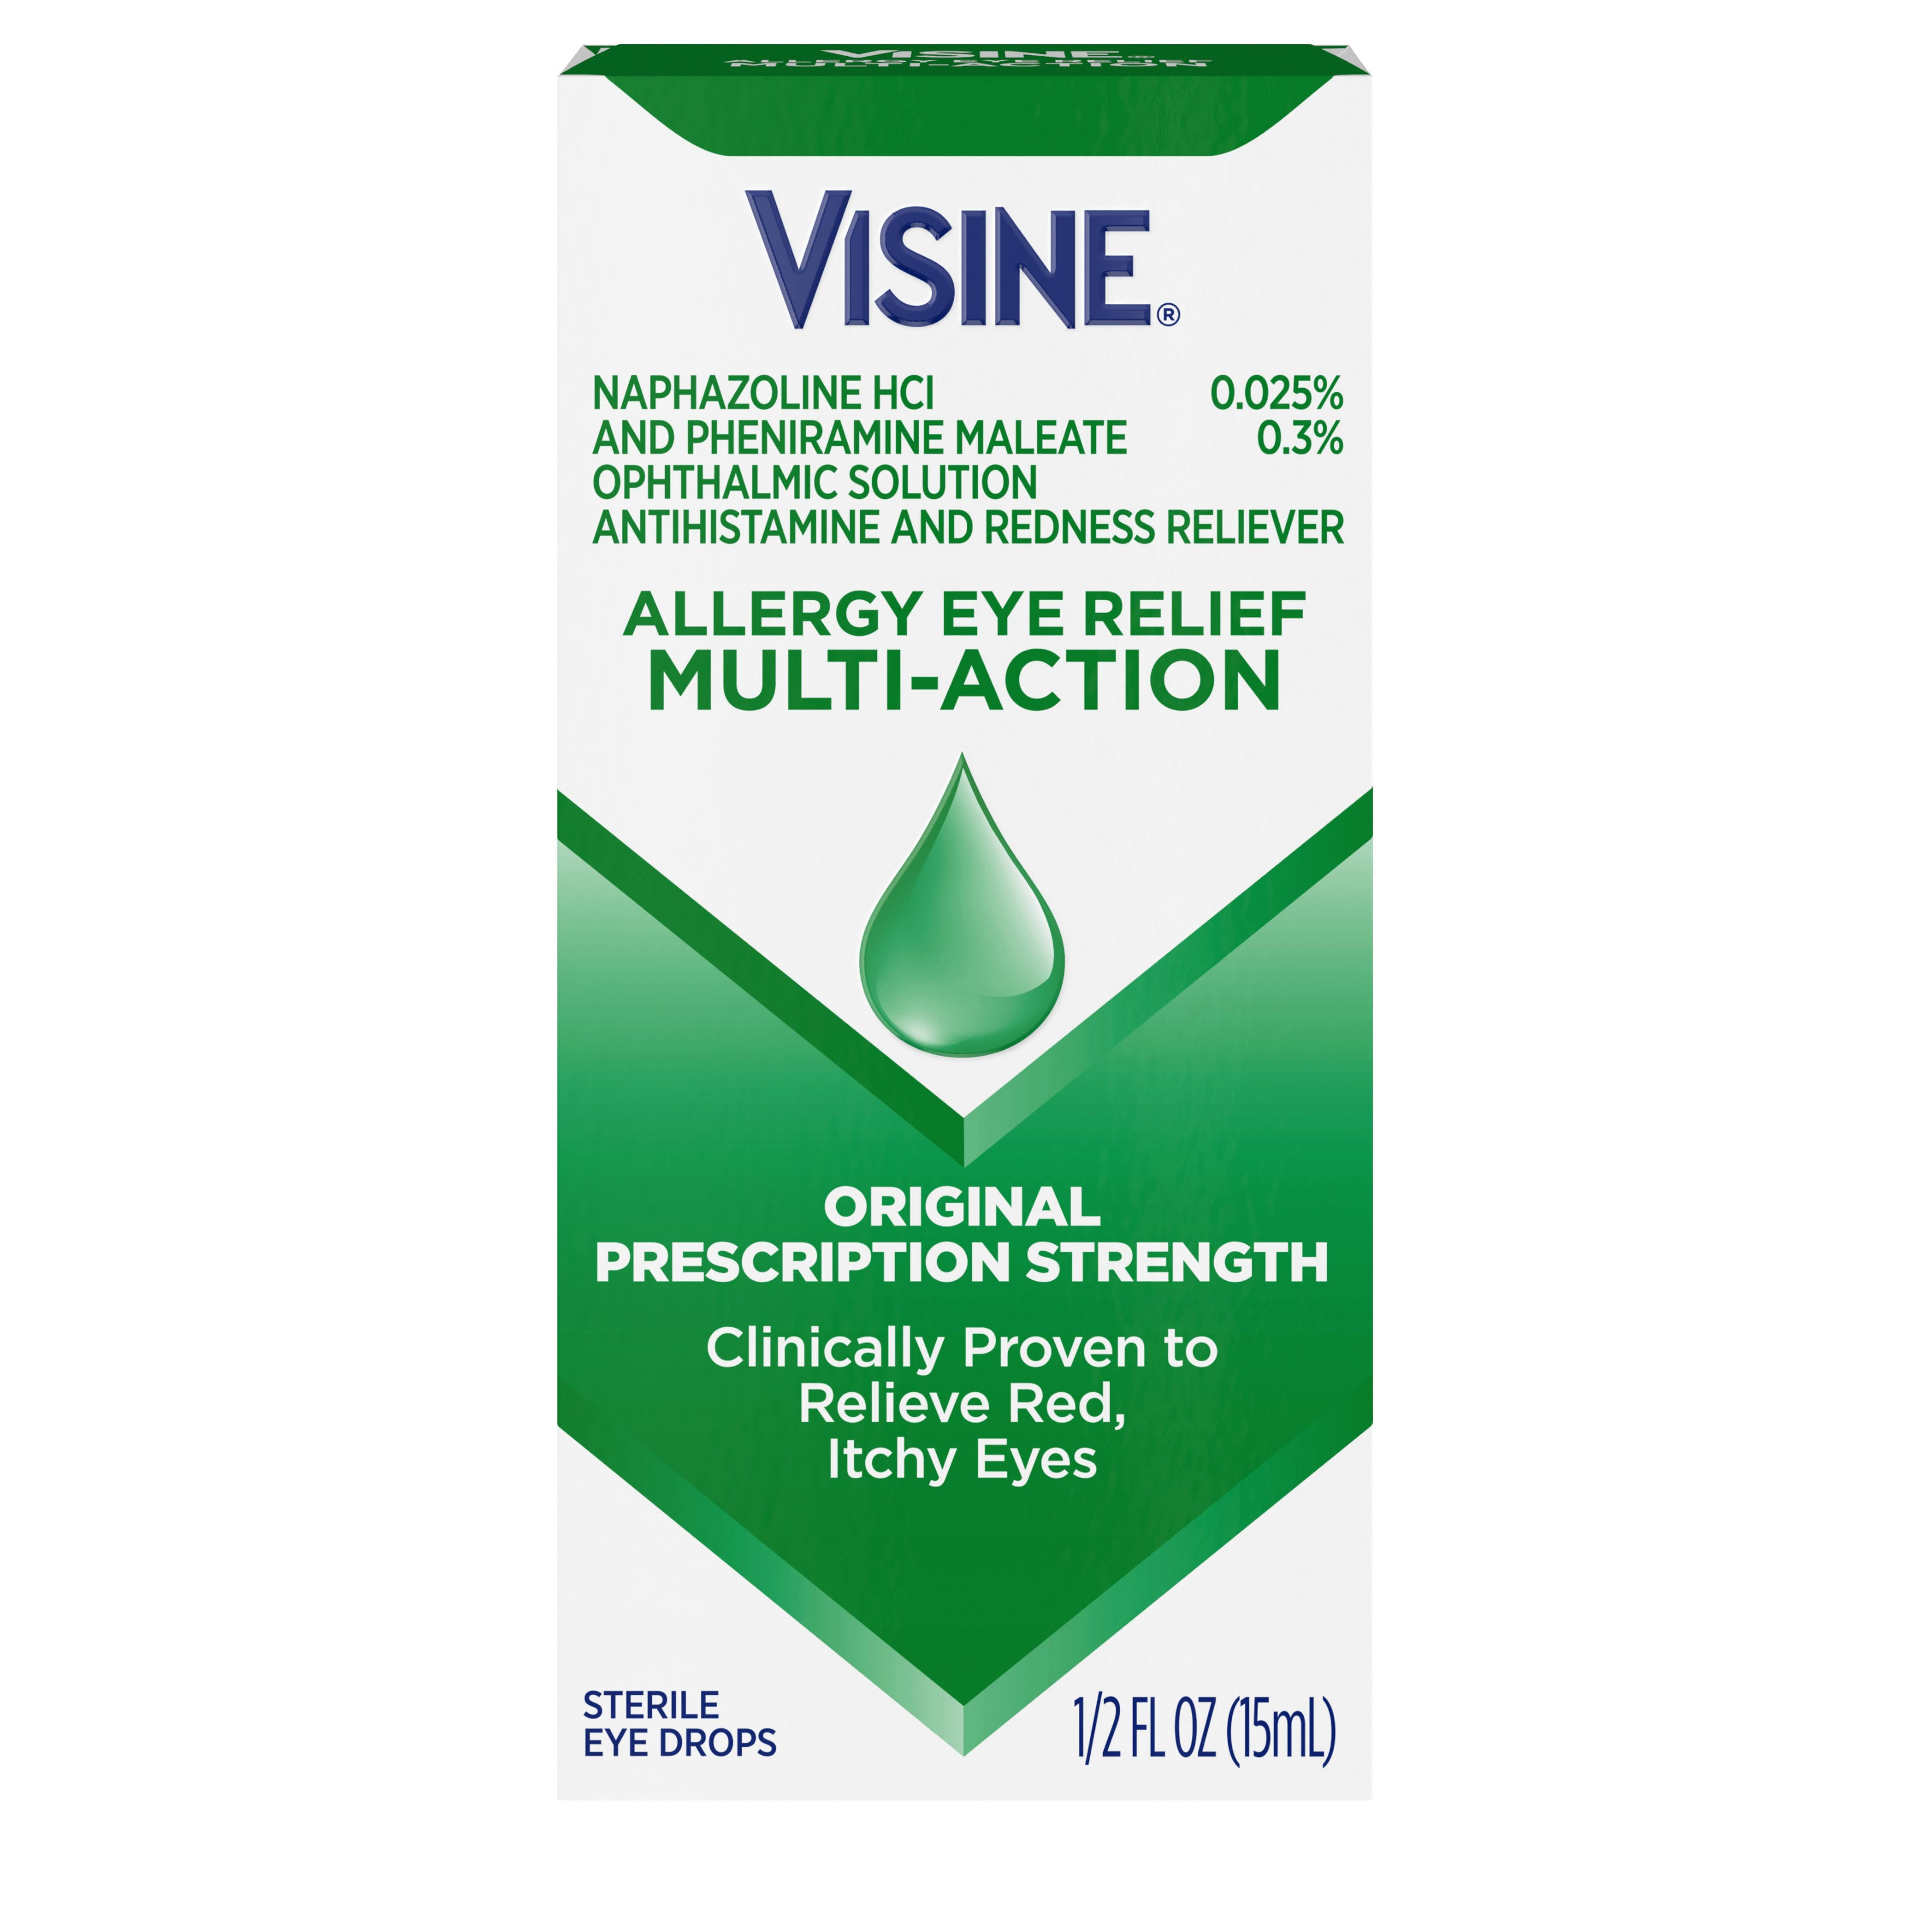 Visine allergy eye relief multi-action drops, 0.5 oz